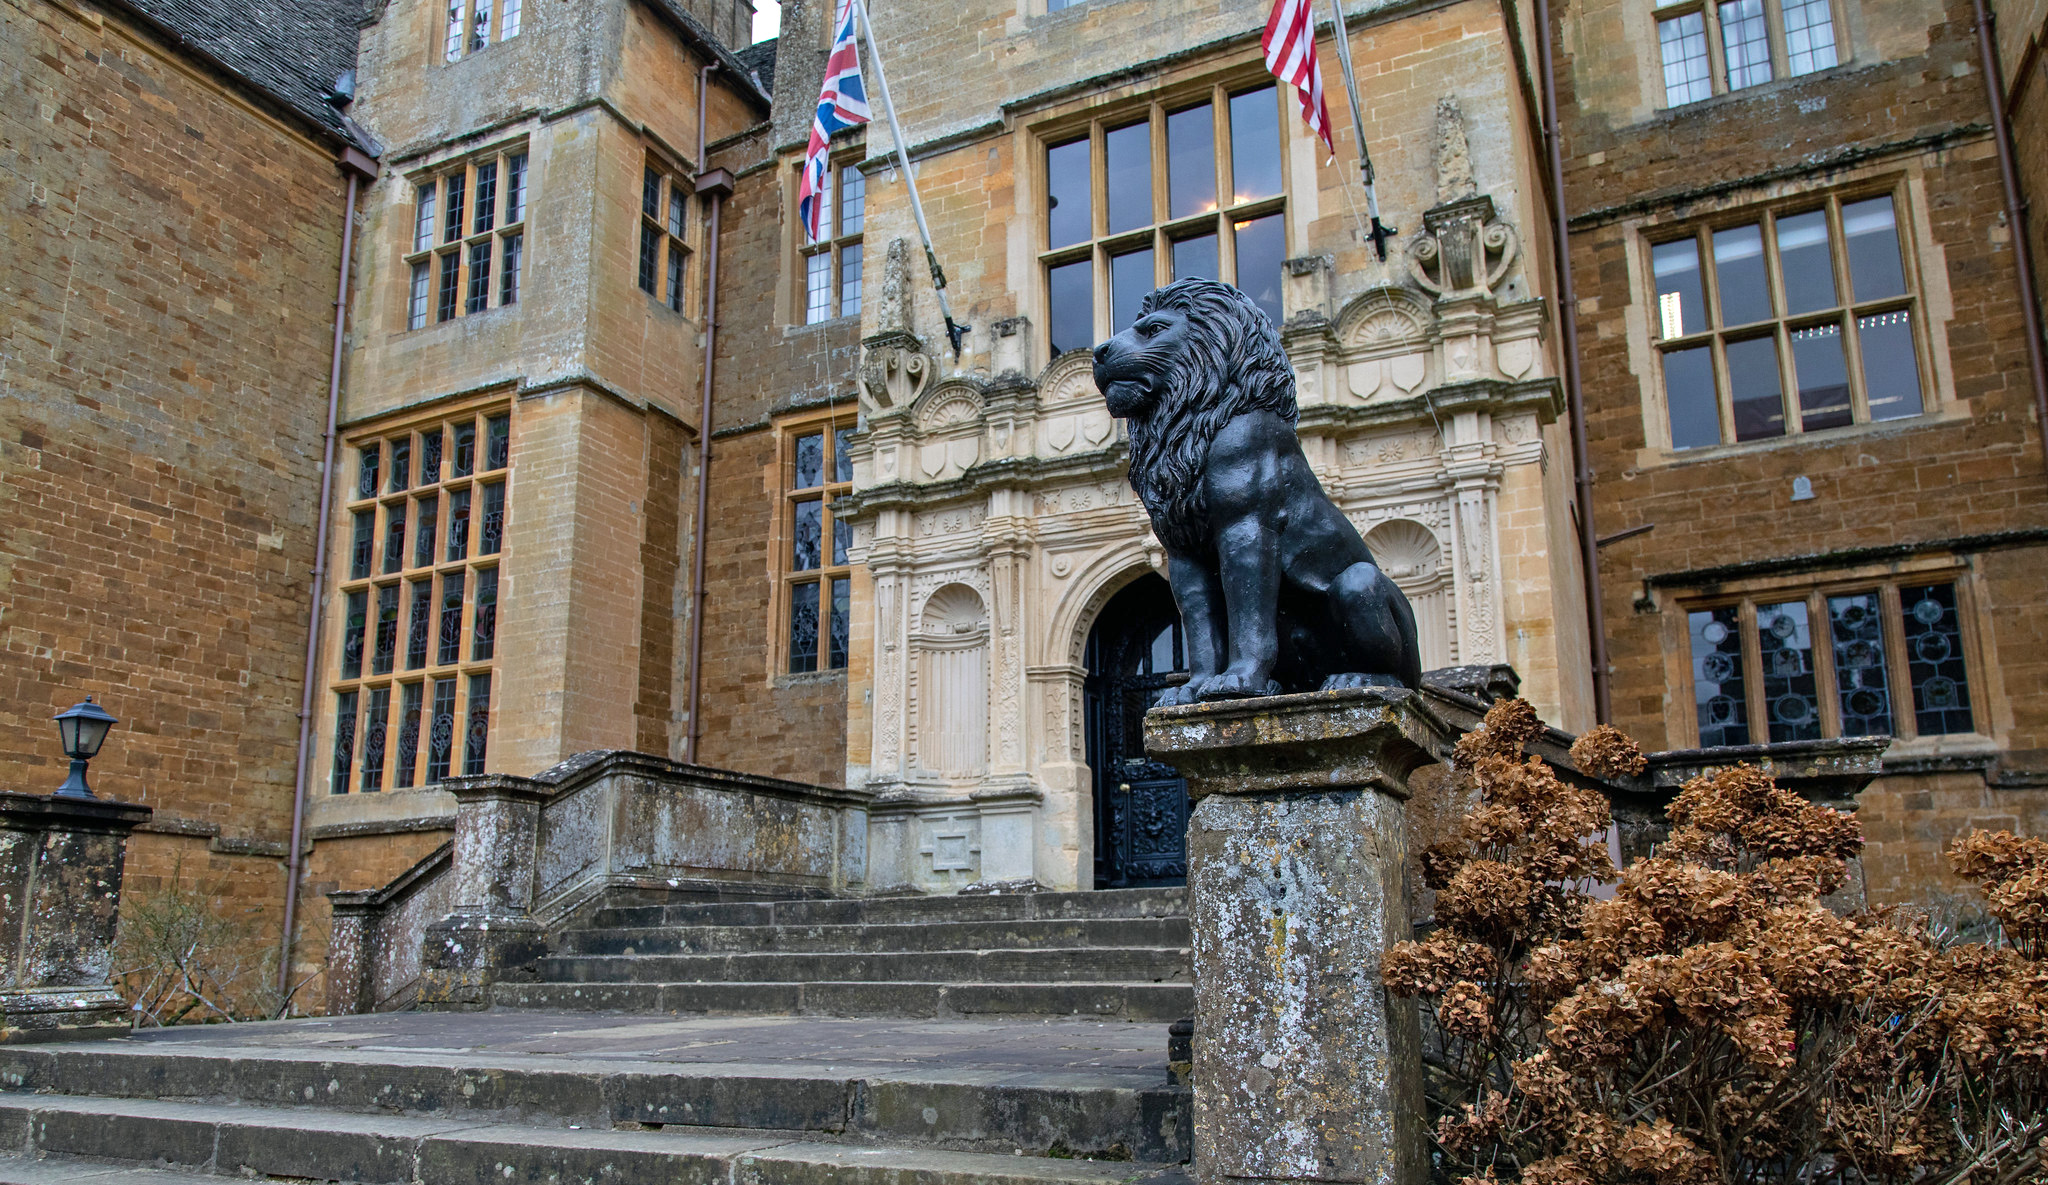 A lion sculpture sits atop a pillar near the entrance of Wroxton Abbey.